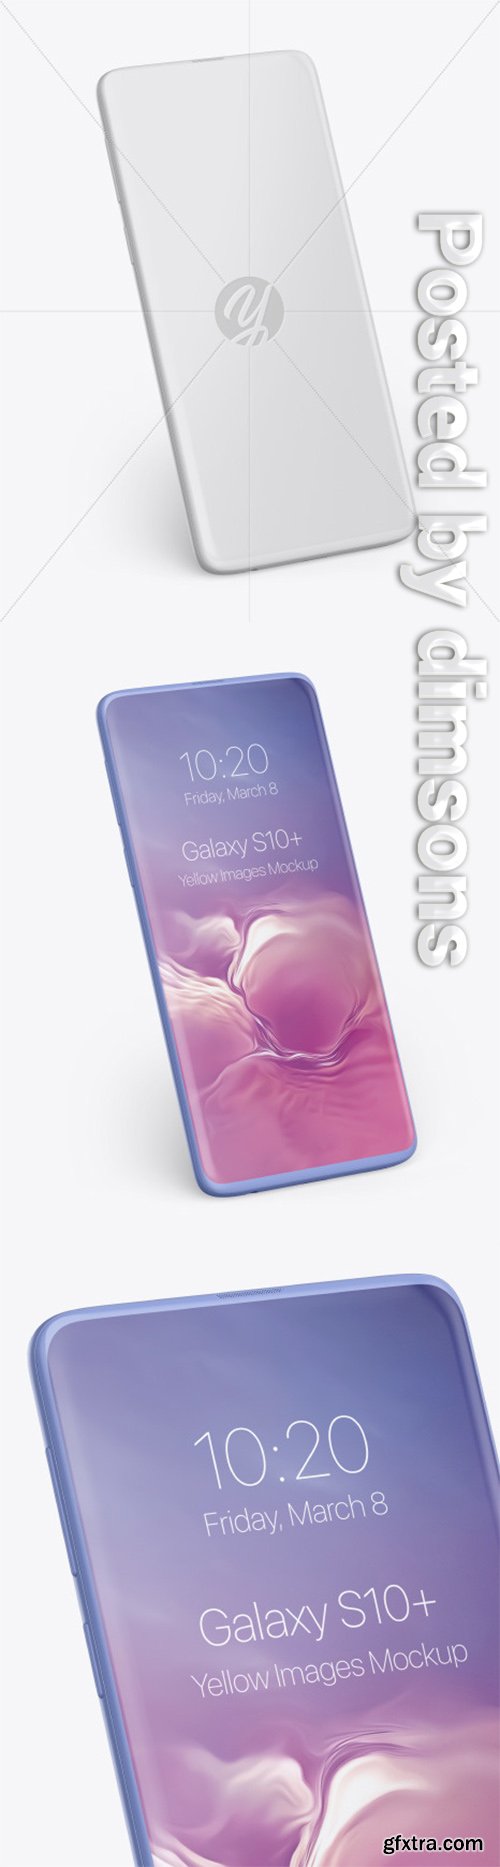 Clay Samsung Galaxy S10+ Mockup 50514